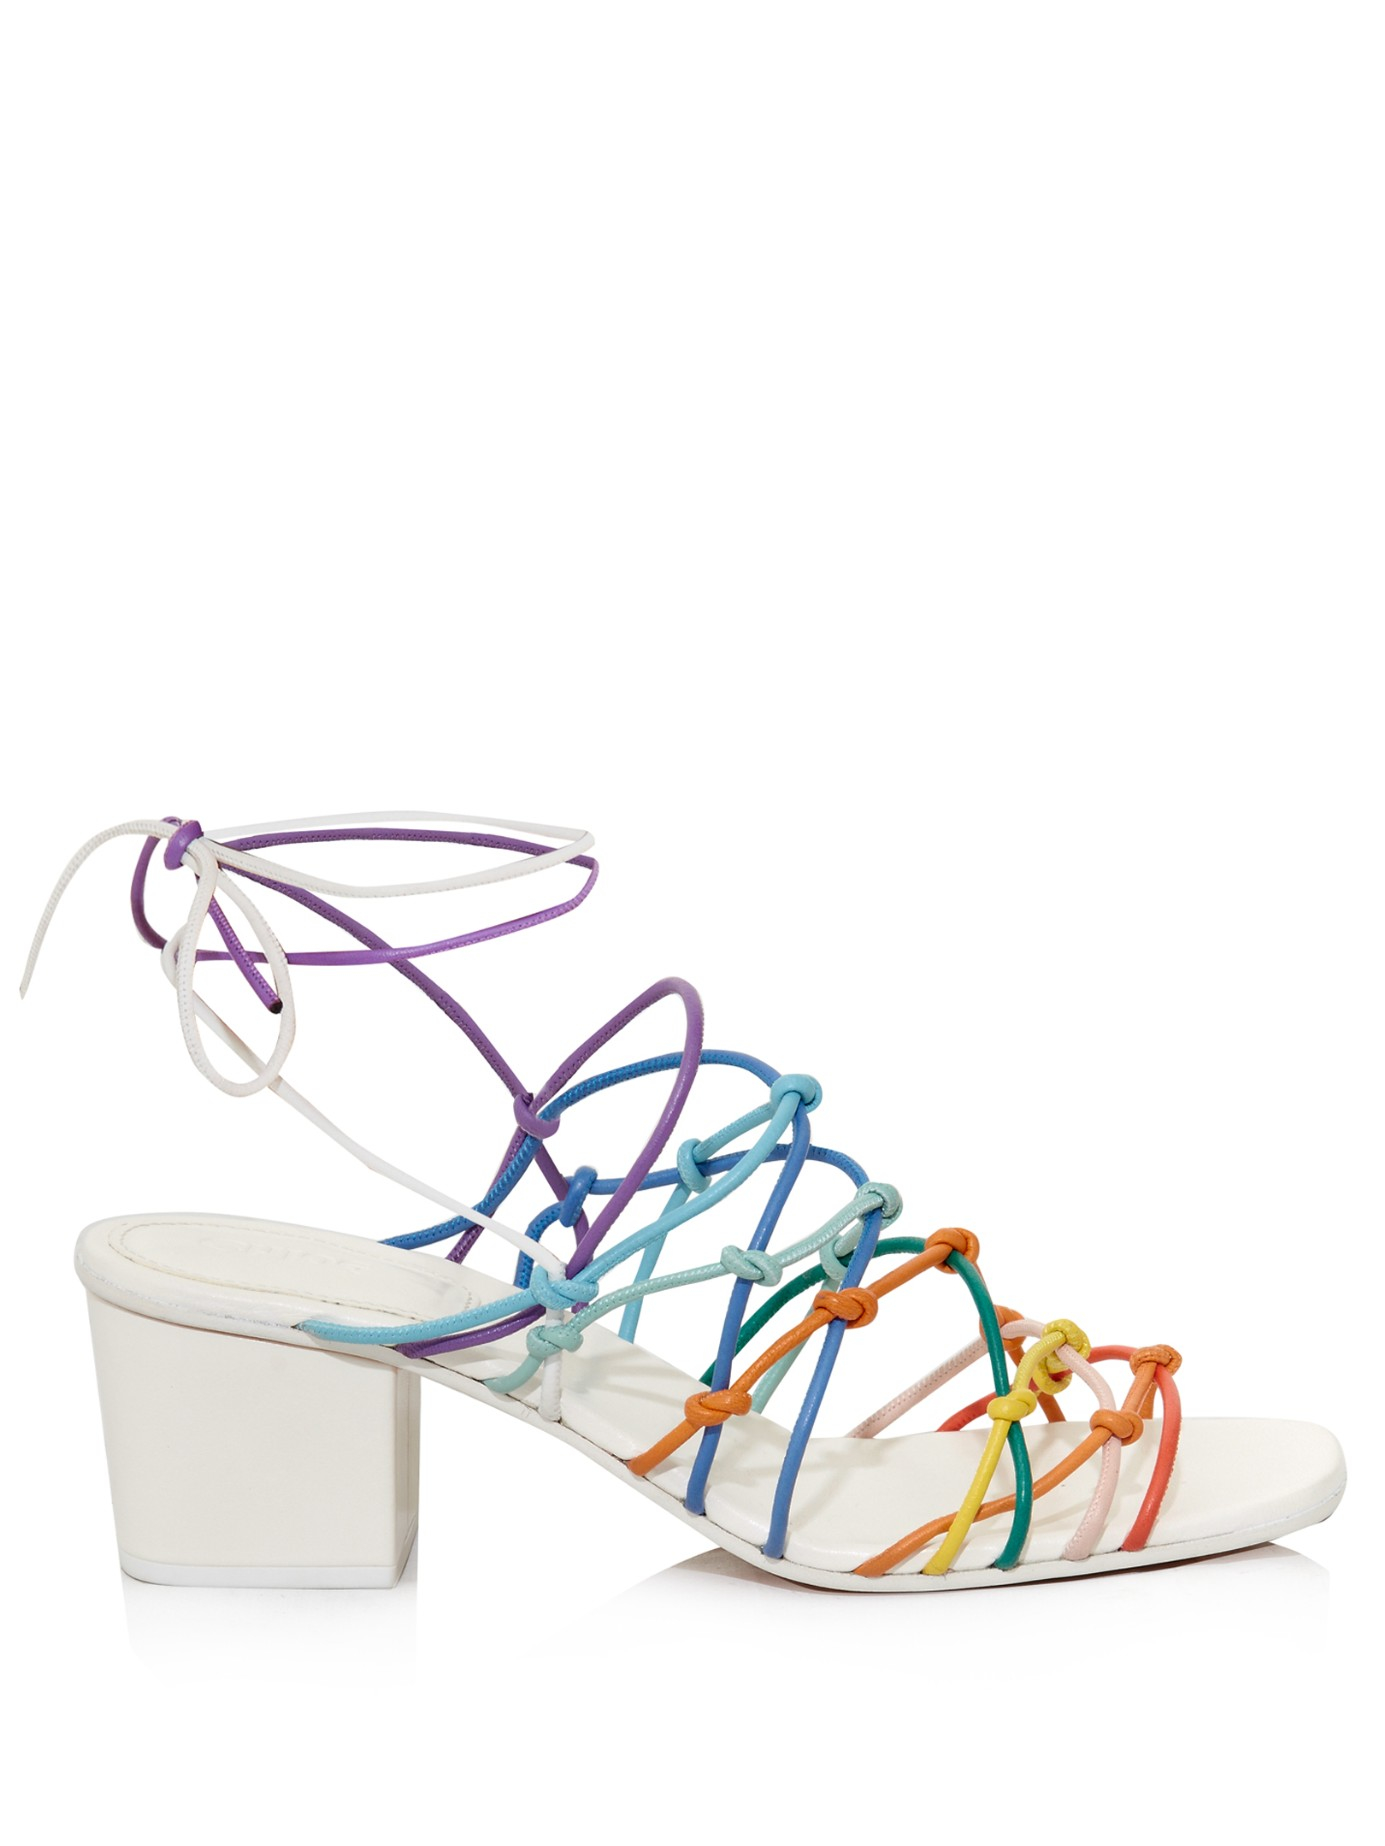 Chloé Skinny Strap Sandals in Multicolor | Lyst